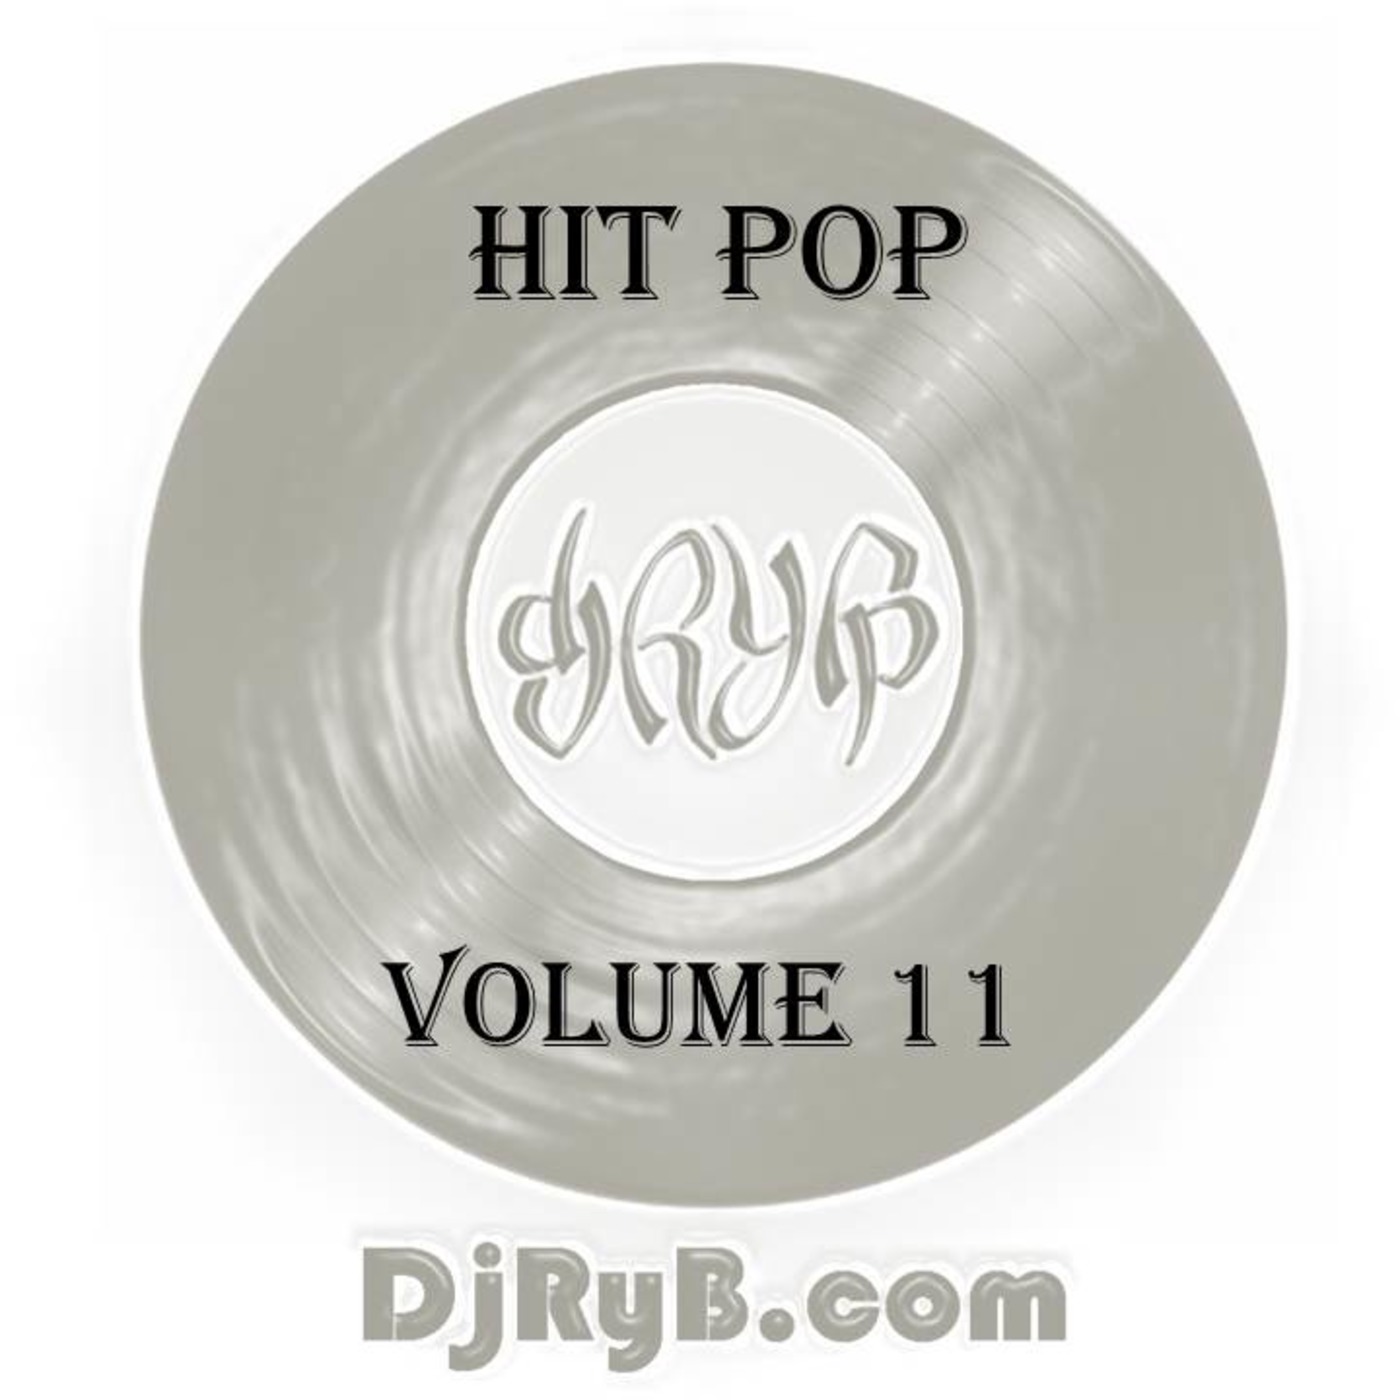 Hit Pop Volume 11 - Dj RyB